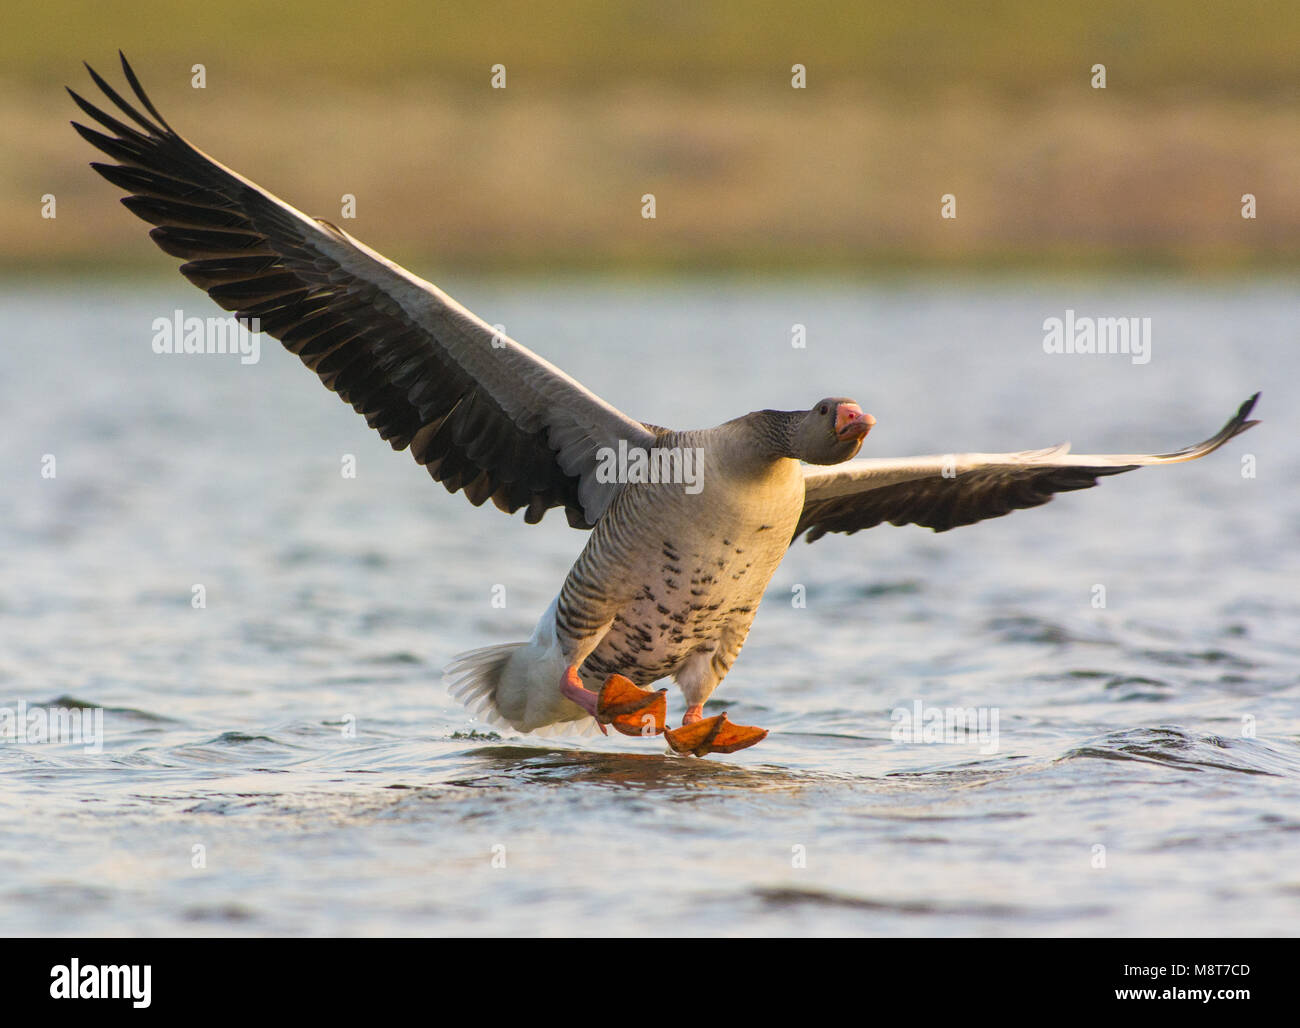 Grauwe Gans landend in water, Greylag Goose landing in water Stock Photo